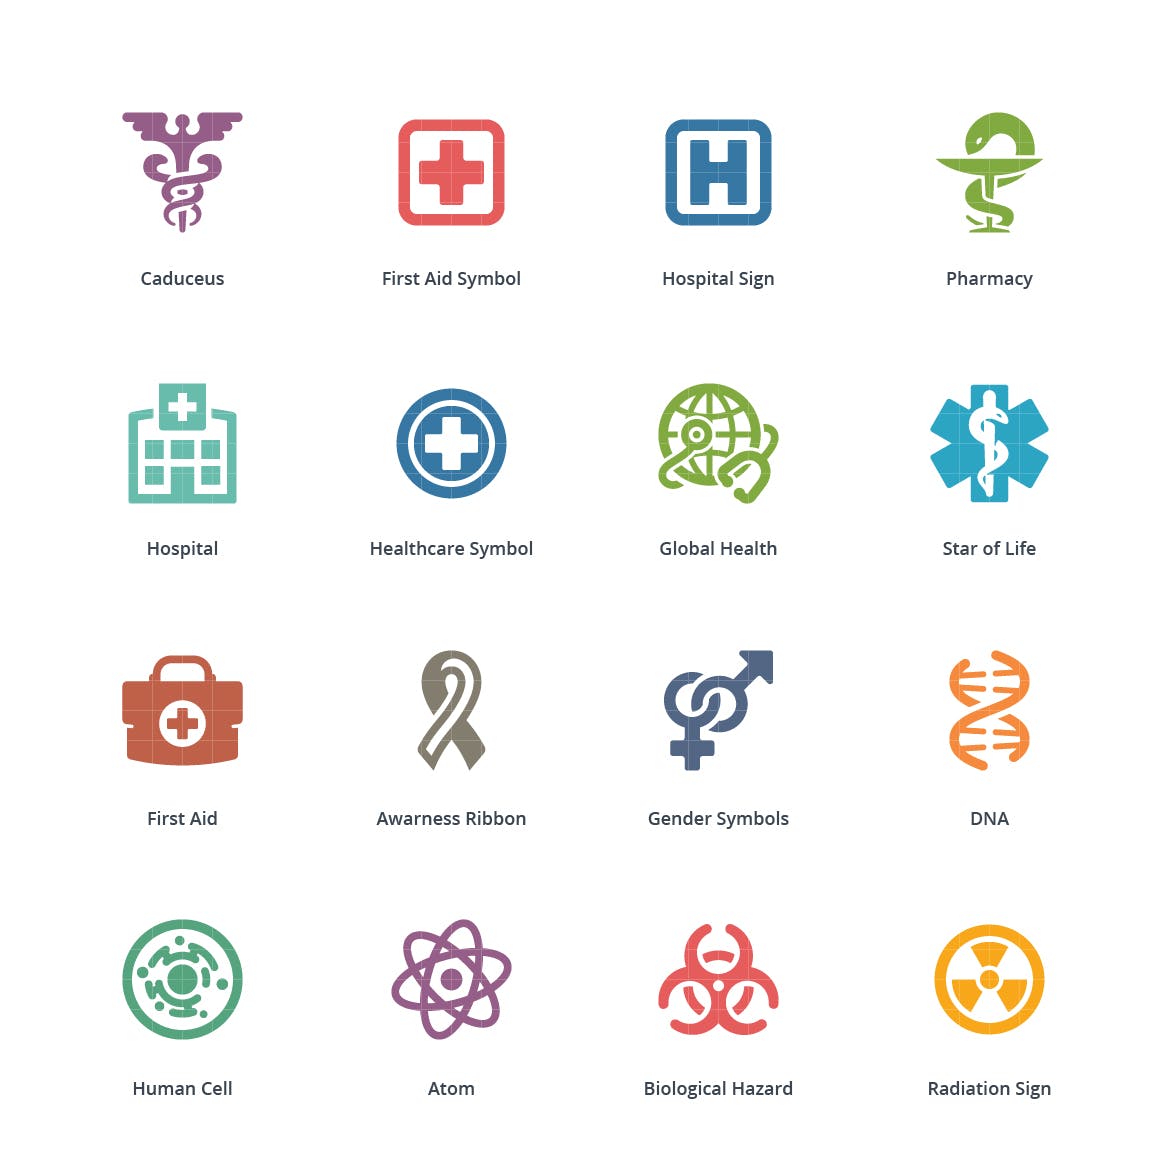 Colored系列-医疗保健主题矢量亿图网易图库精选图标集v1 Medical & Health Care Icons Set 1 – Colored Series插图(1)